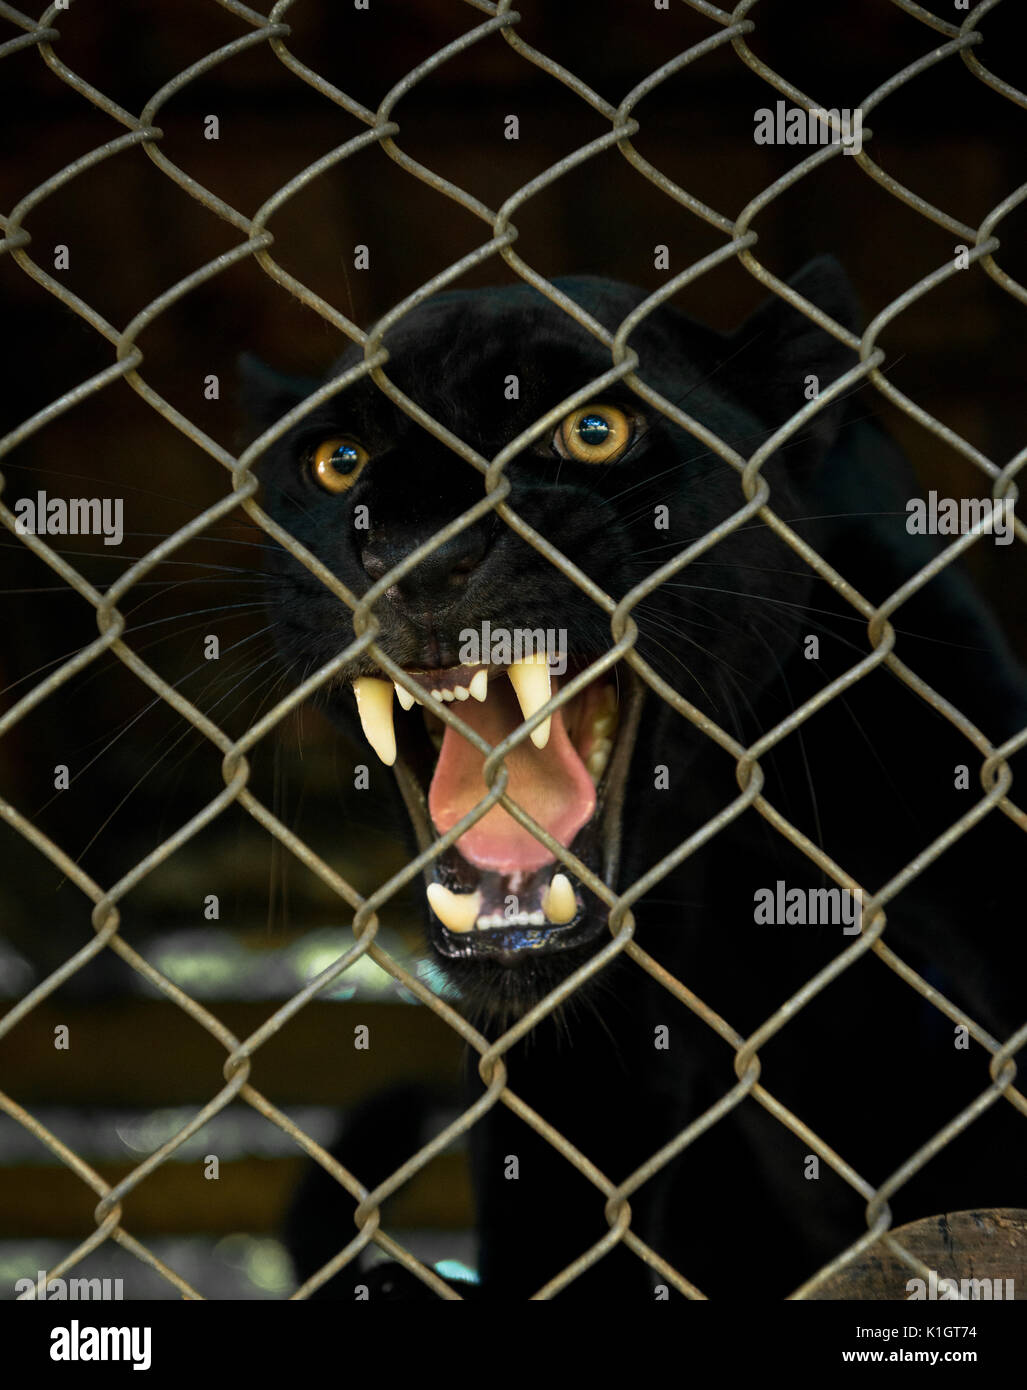 An angry Black Jaguar snarling inside an enclosure Stock Photo